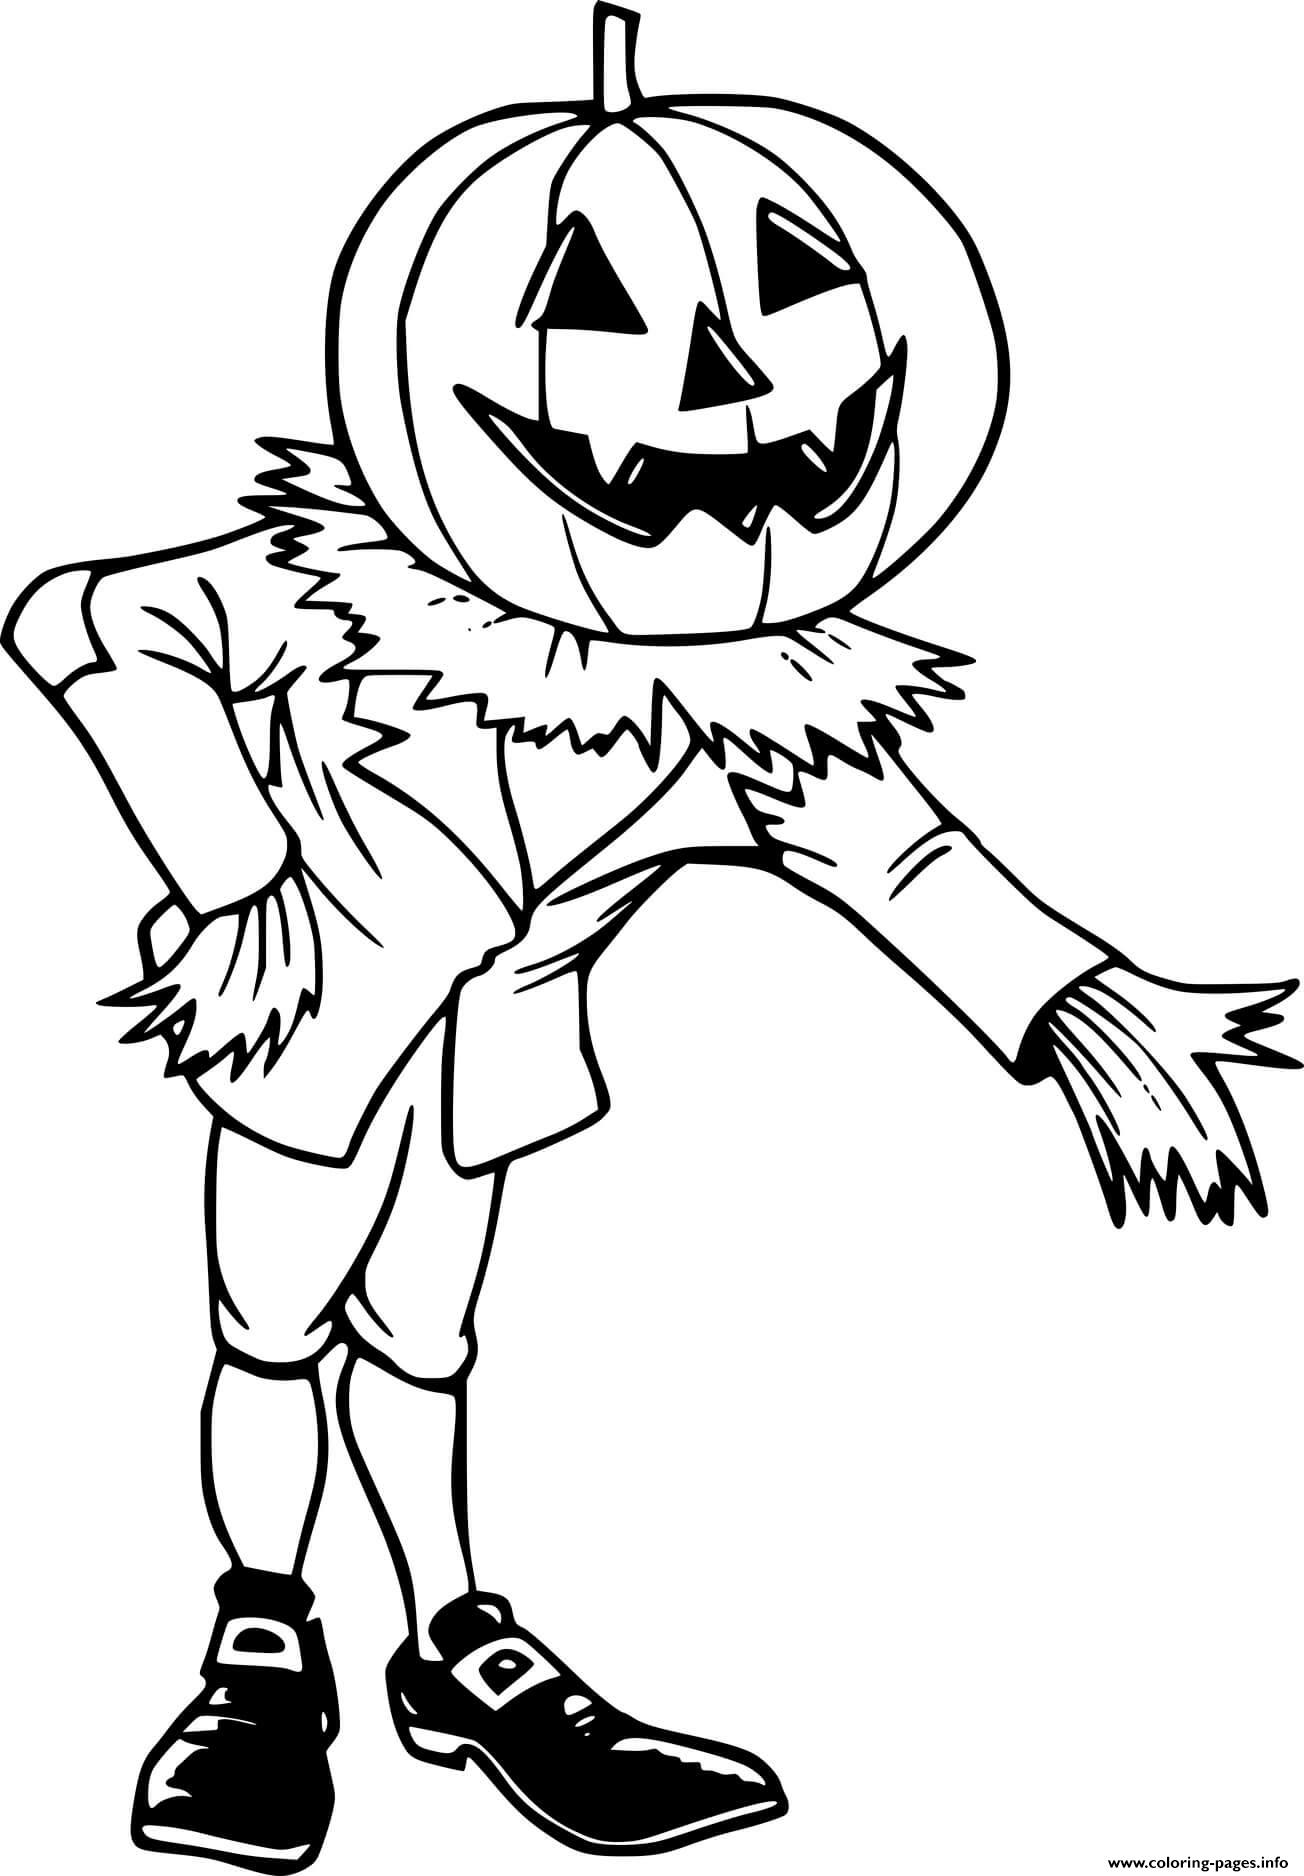 Jack O Lantern Scarecrow Welcome coloring